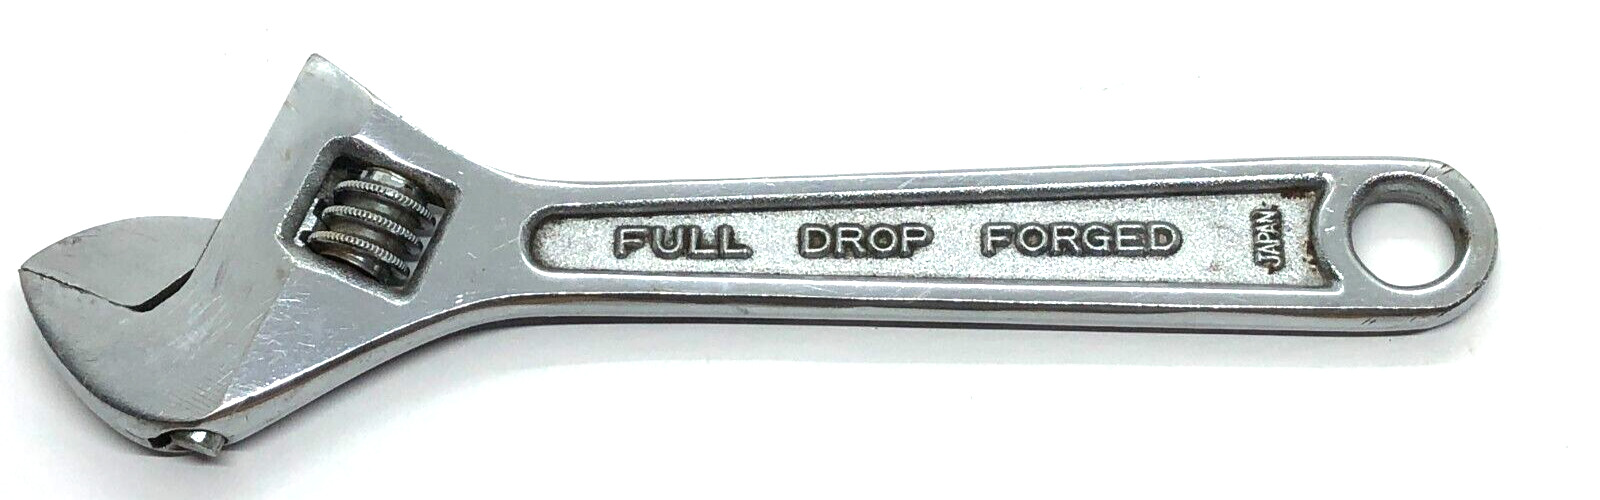 Fuller Adjustable 6 Inch Wrench Alloy No 6 150mm Japan